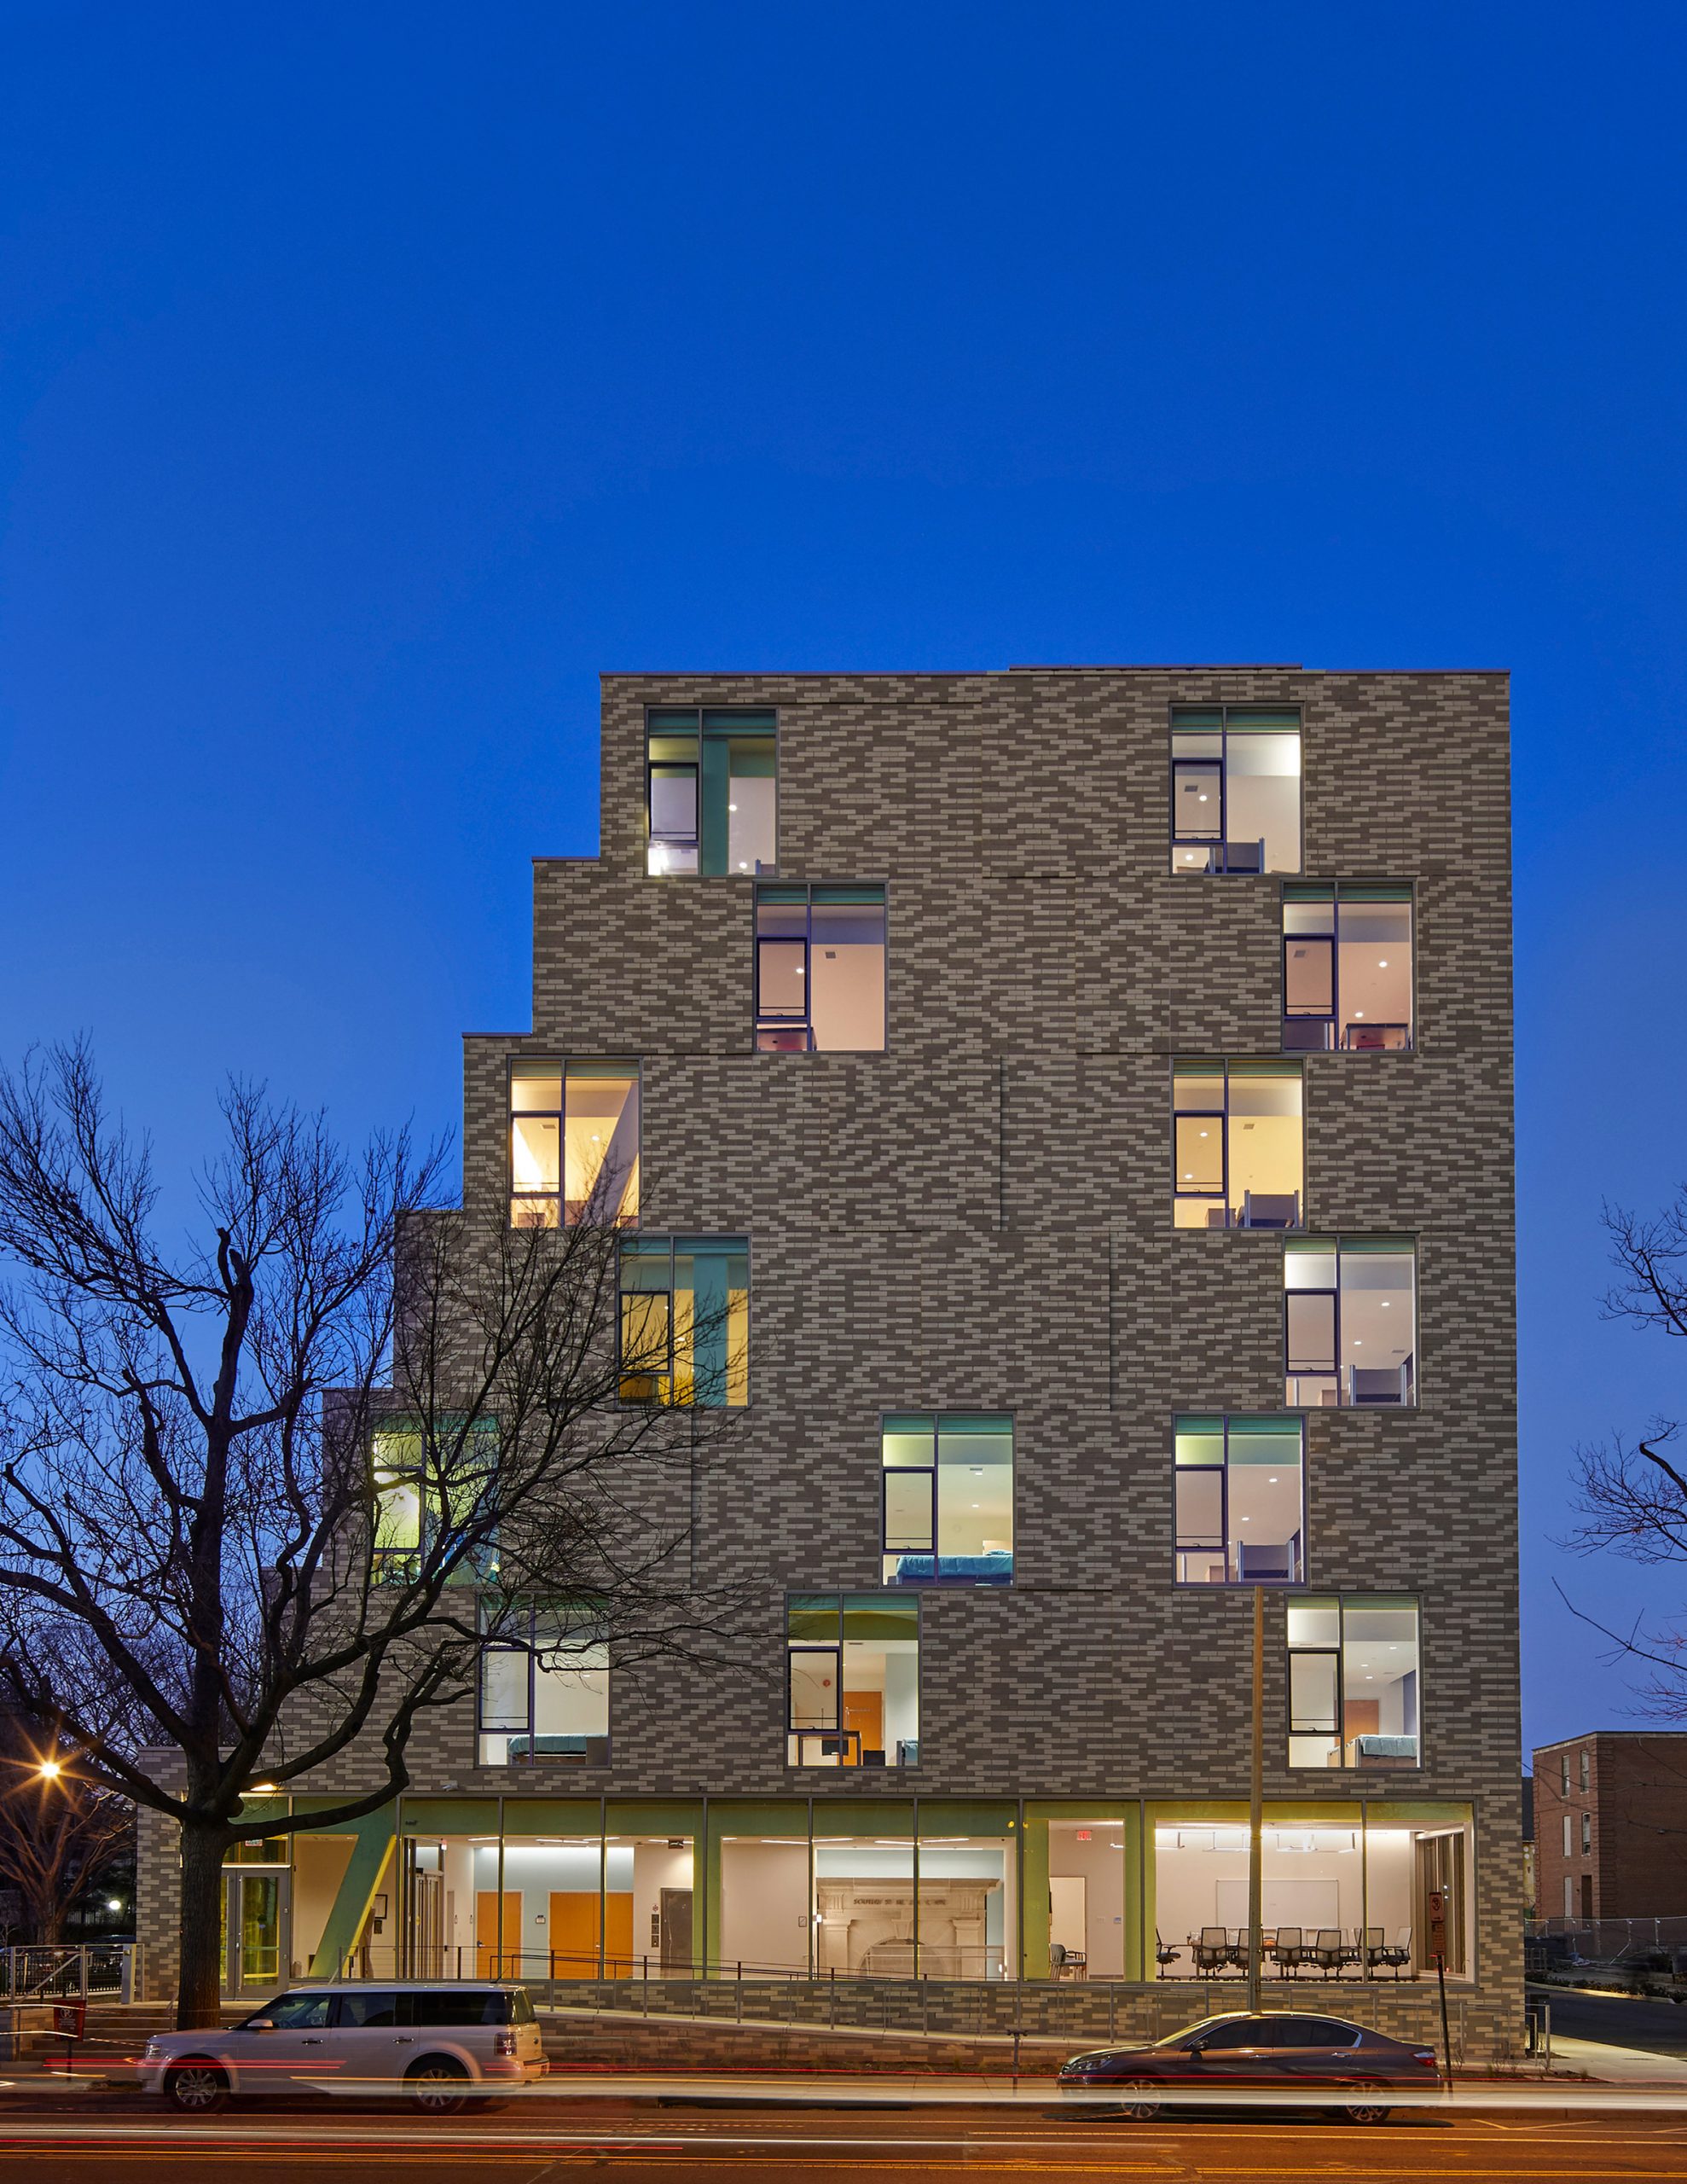 A brick housing complex in Washington DC